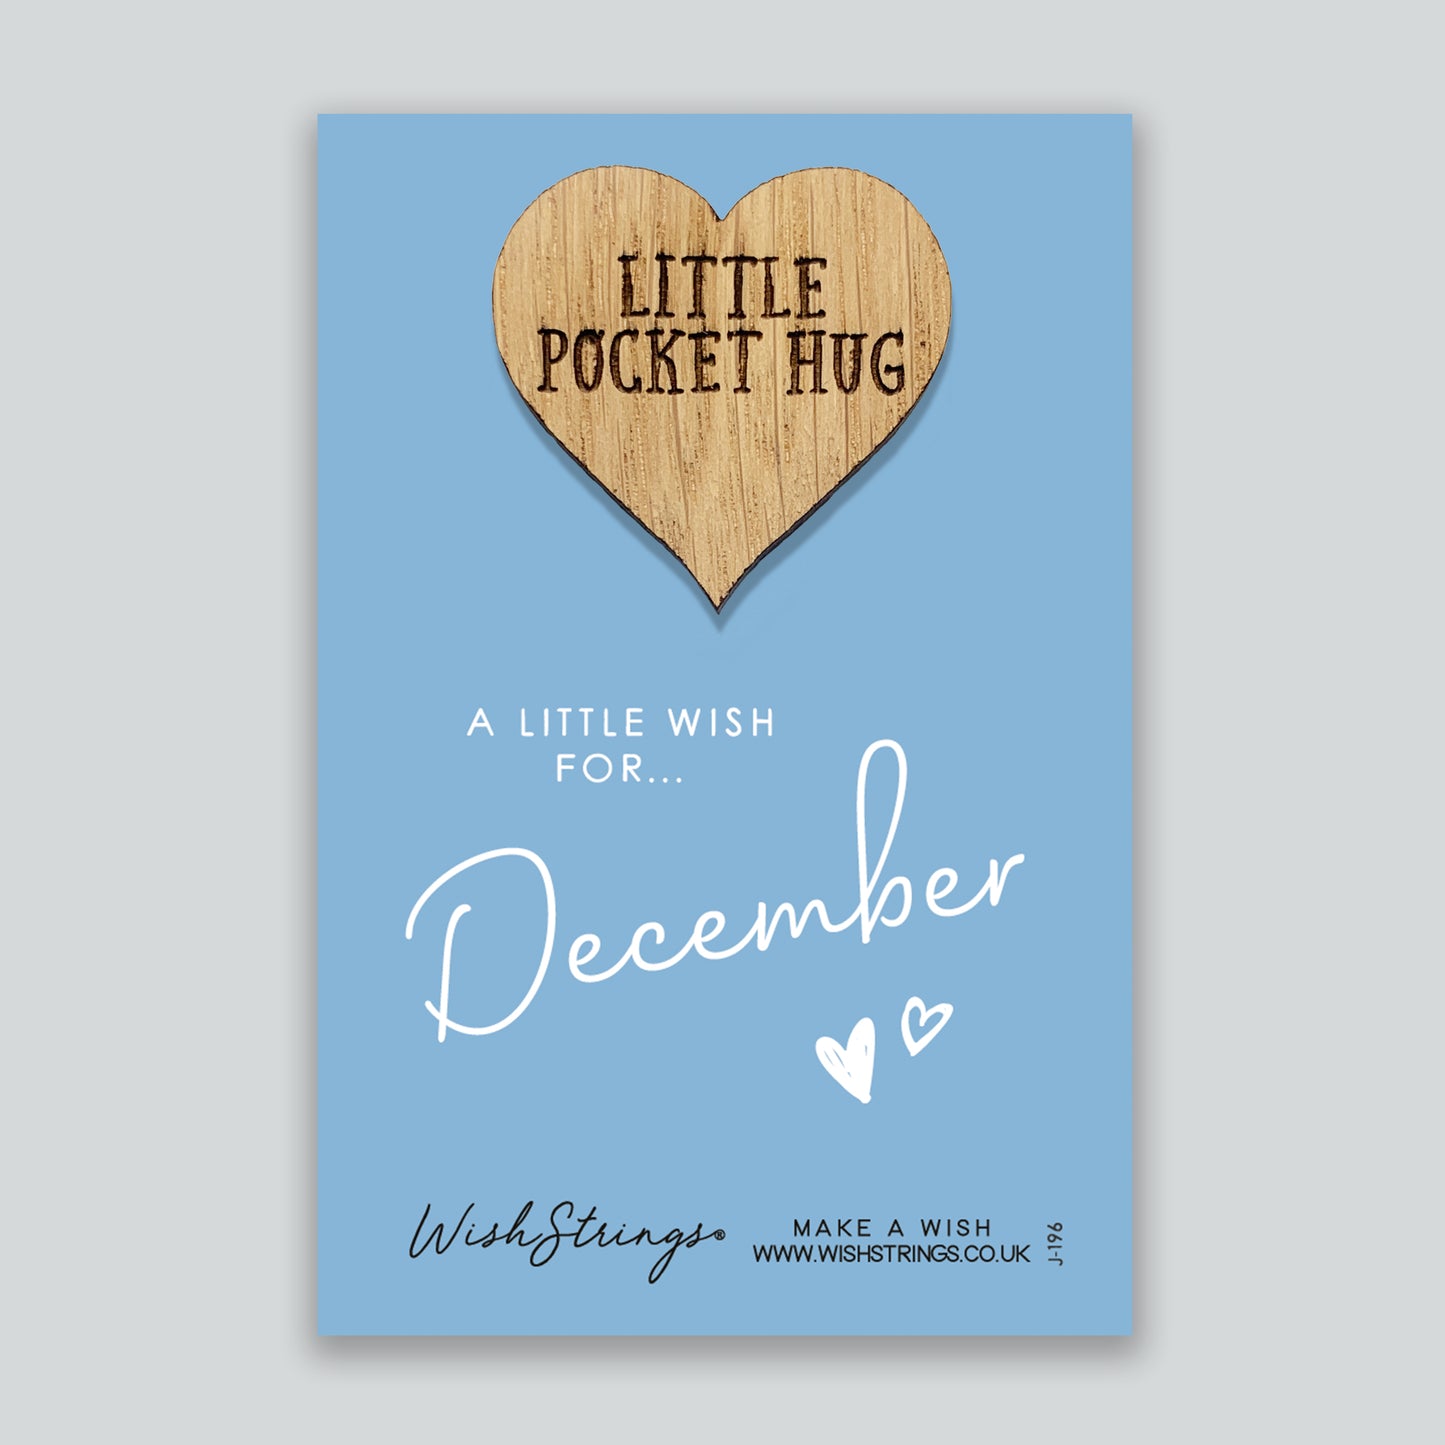 December - Little Pocket Hug - Wooden Heart Keepsake Token